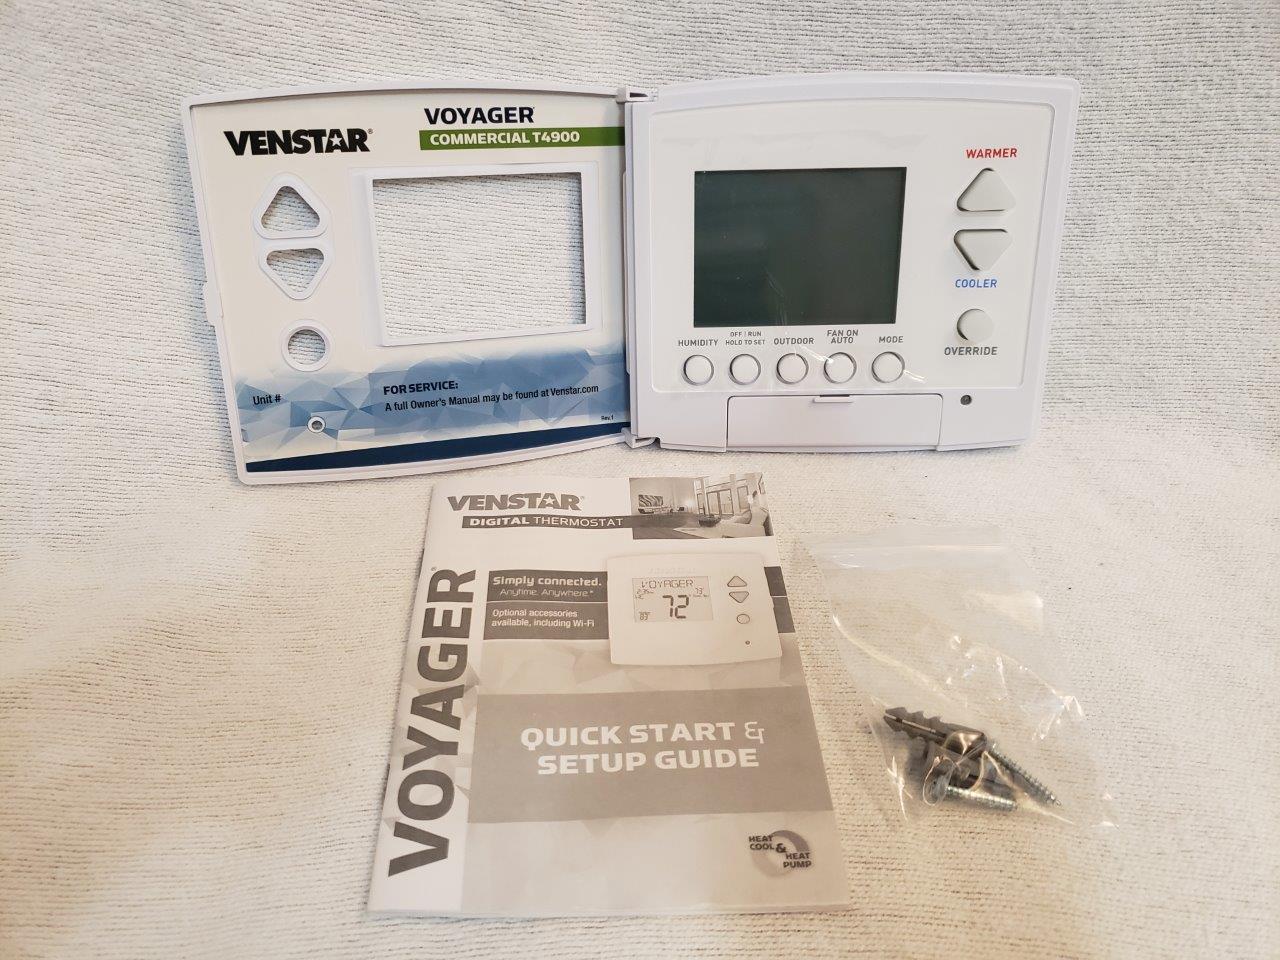 Venstar Com Voyager Explorer Wifi Ready Thermostat ~Discount HVAC~ VN-T4900 